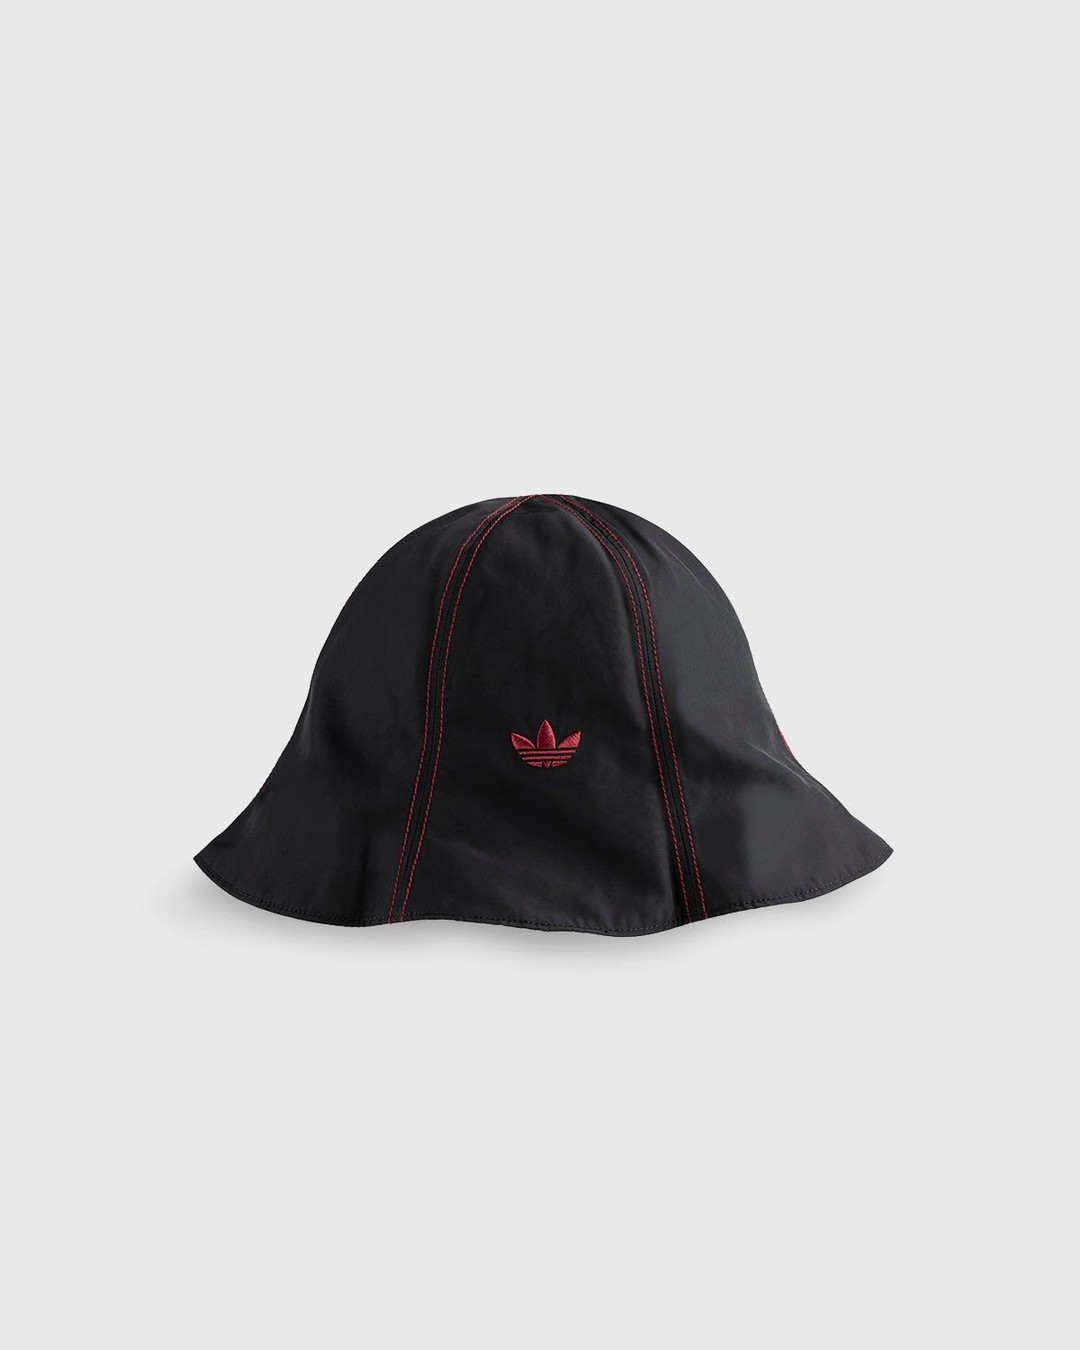 Adidas x Wales Bonner – Sunhat Black Burgundy - Bucket Hats - Red - Image 2